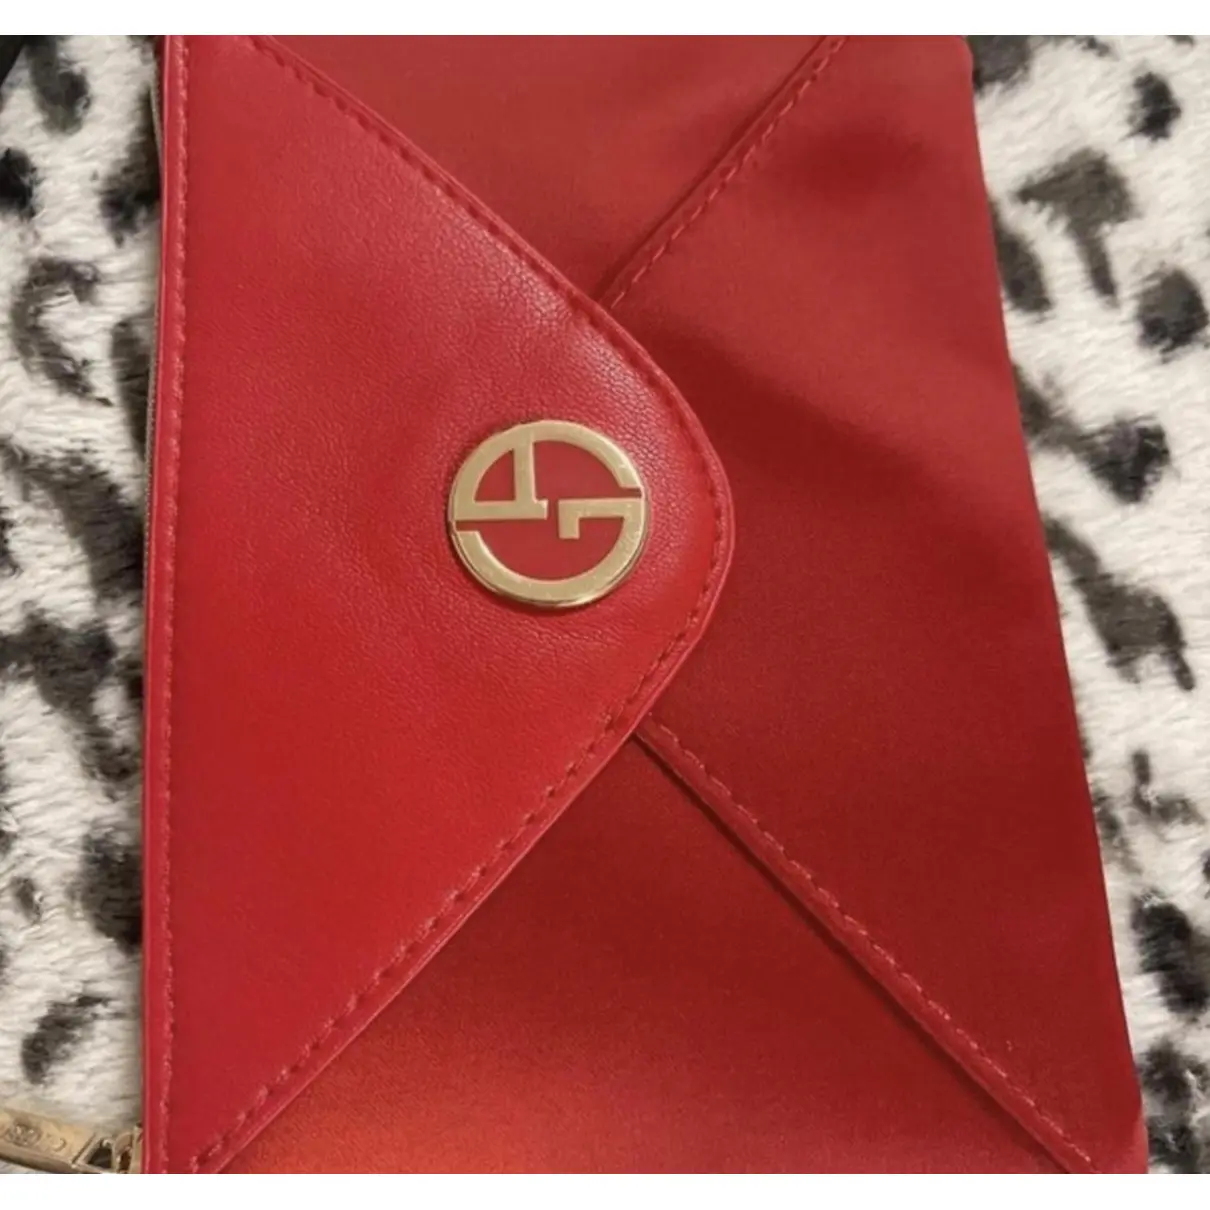 Buy Giorgio Armani Leather clutch bag online